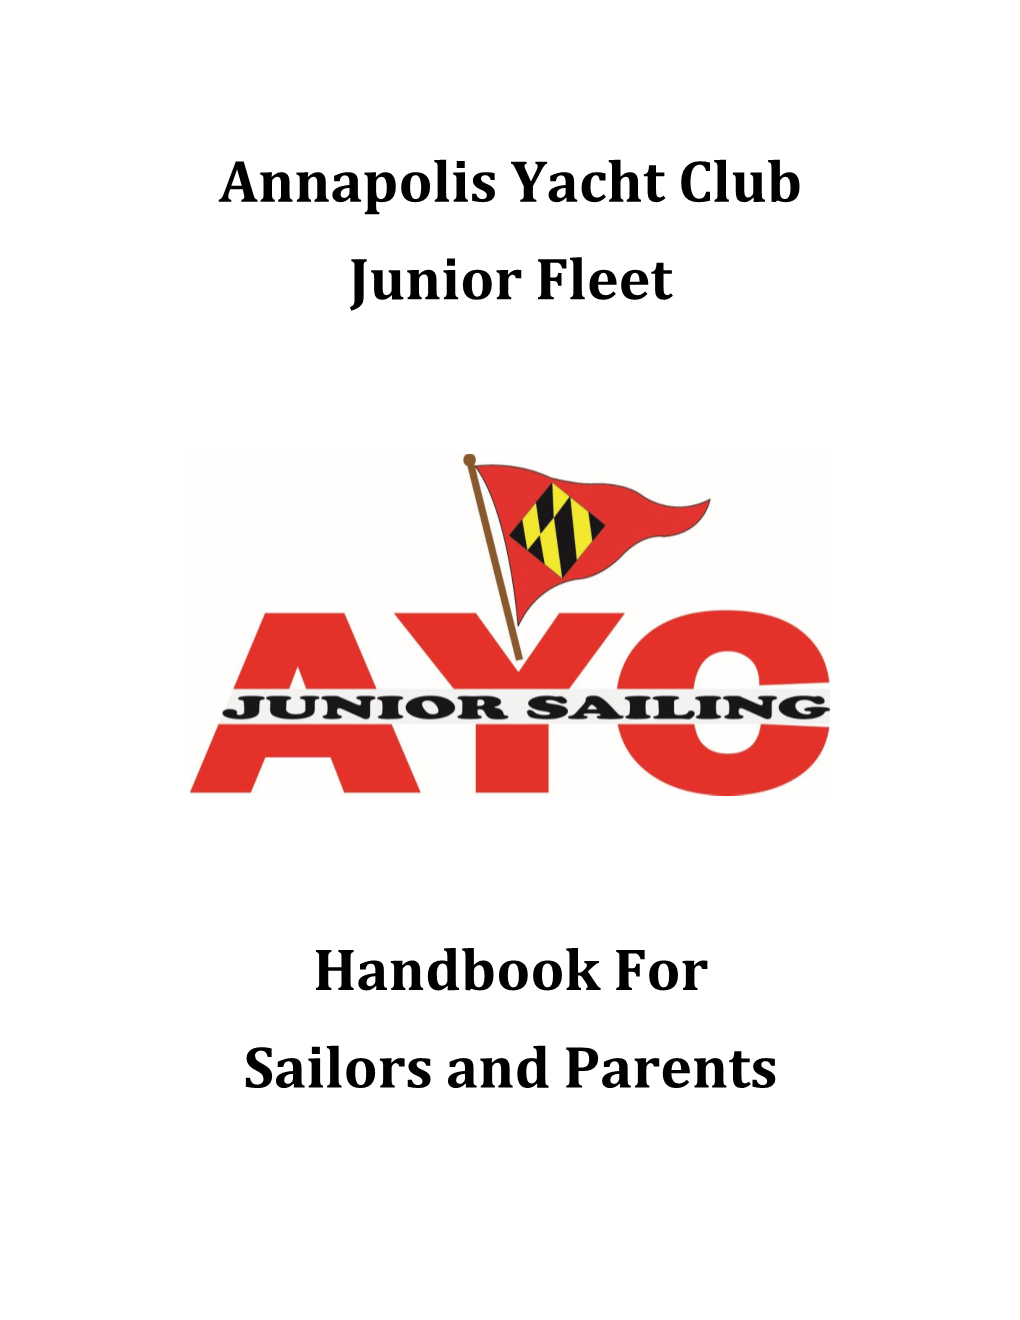 Annapolis Yacht Club Junior Fleet Handbook for Sailors and Parents